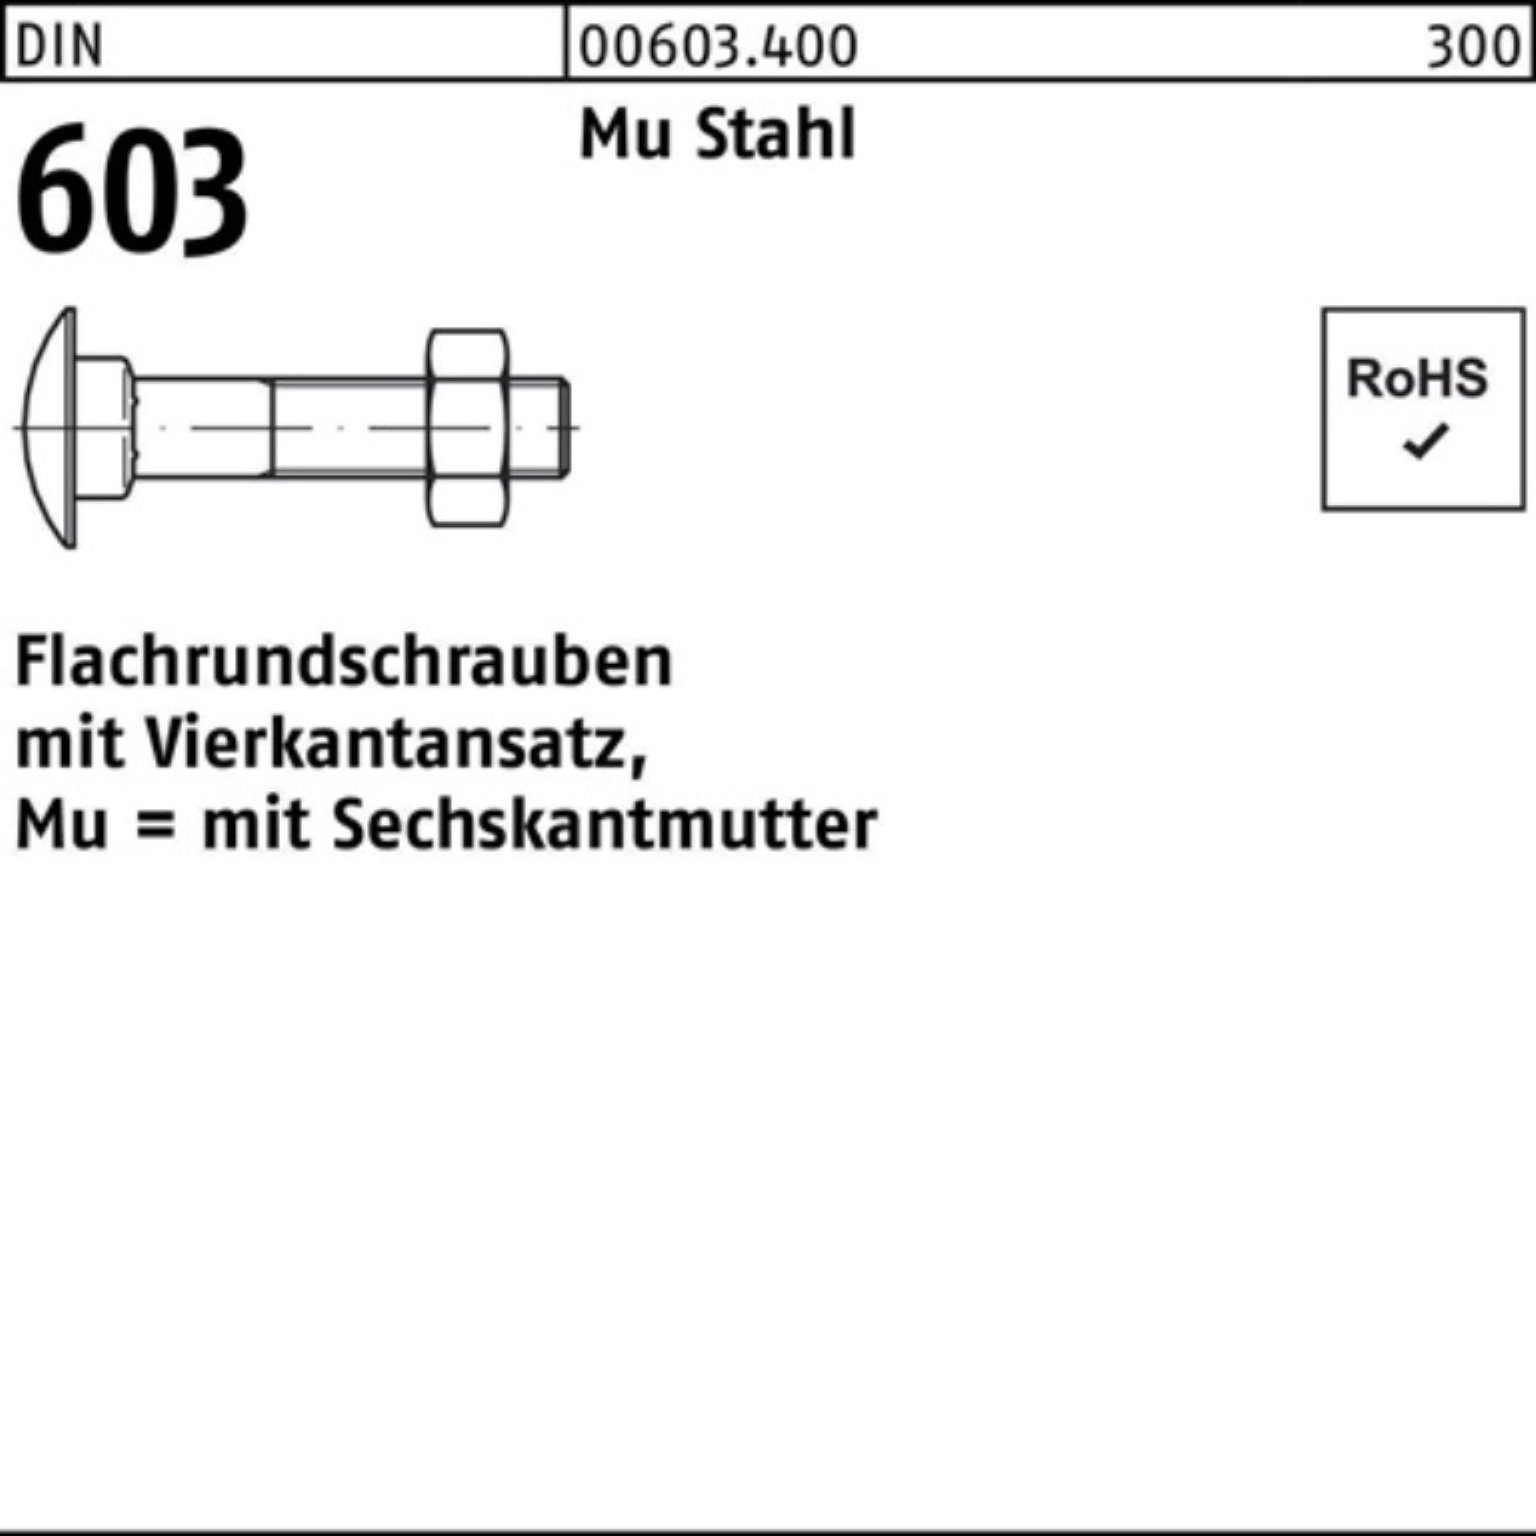 Vierkantansatz/6-ktmutter M10x140 Schraube Pack Reyher Flachrundschraube 100er 603 DIN